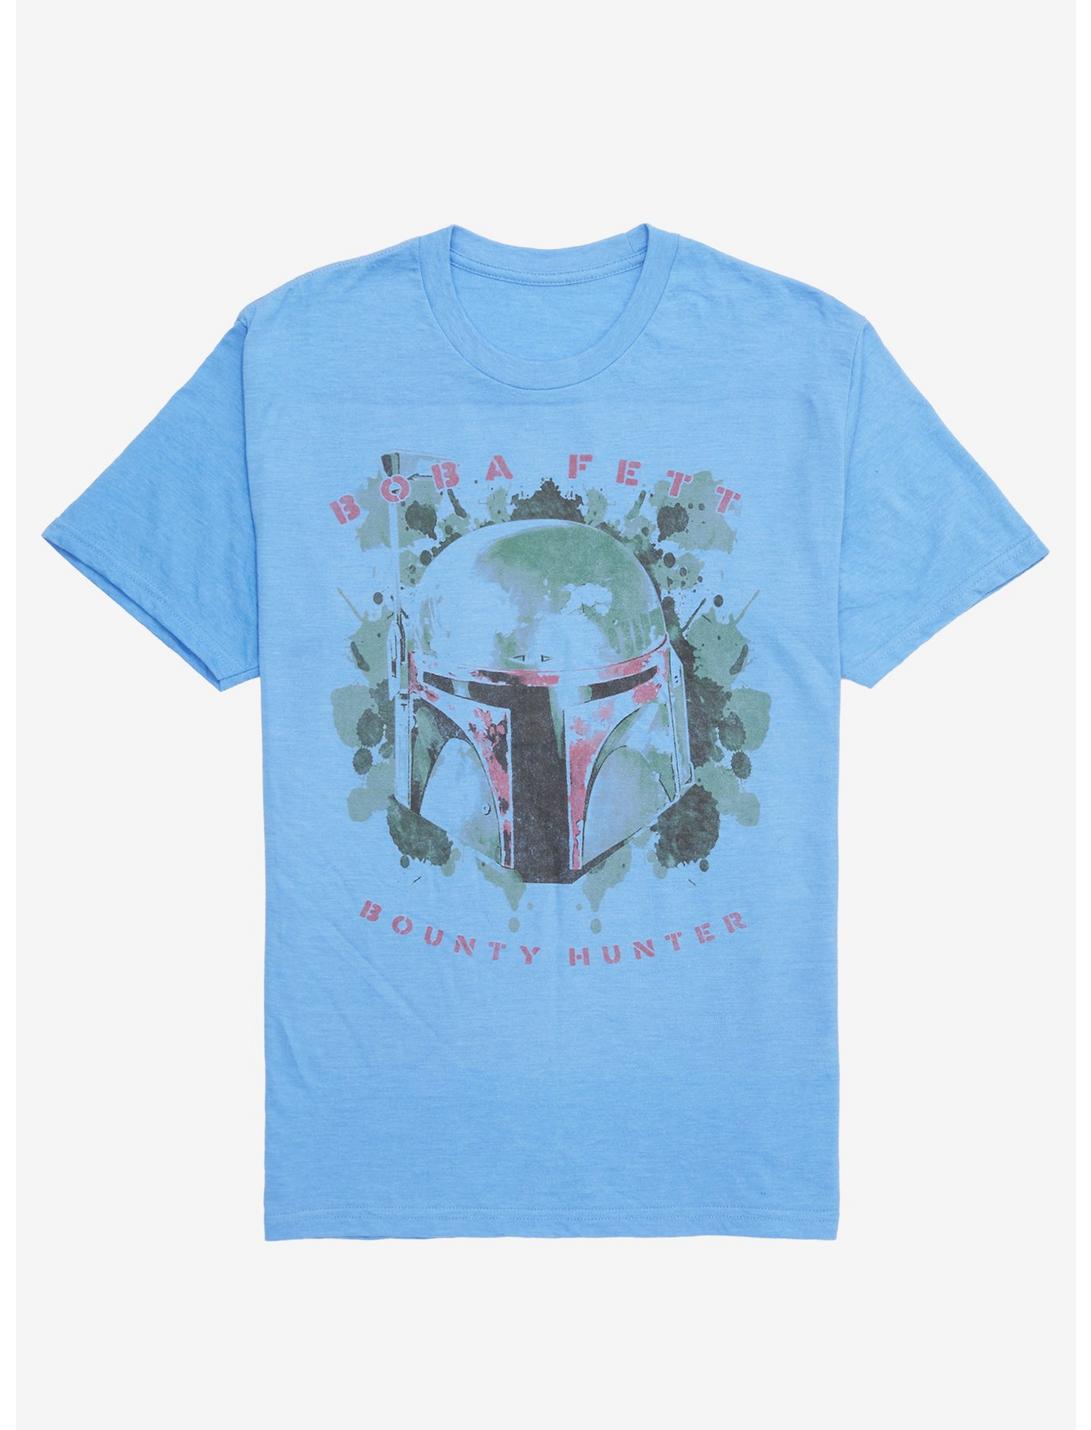 Star Wars Boba Fett Blotch T-Shirt, BLUE, hi-res